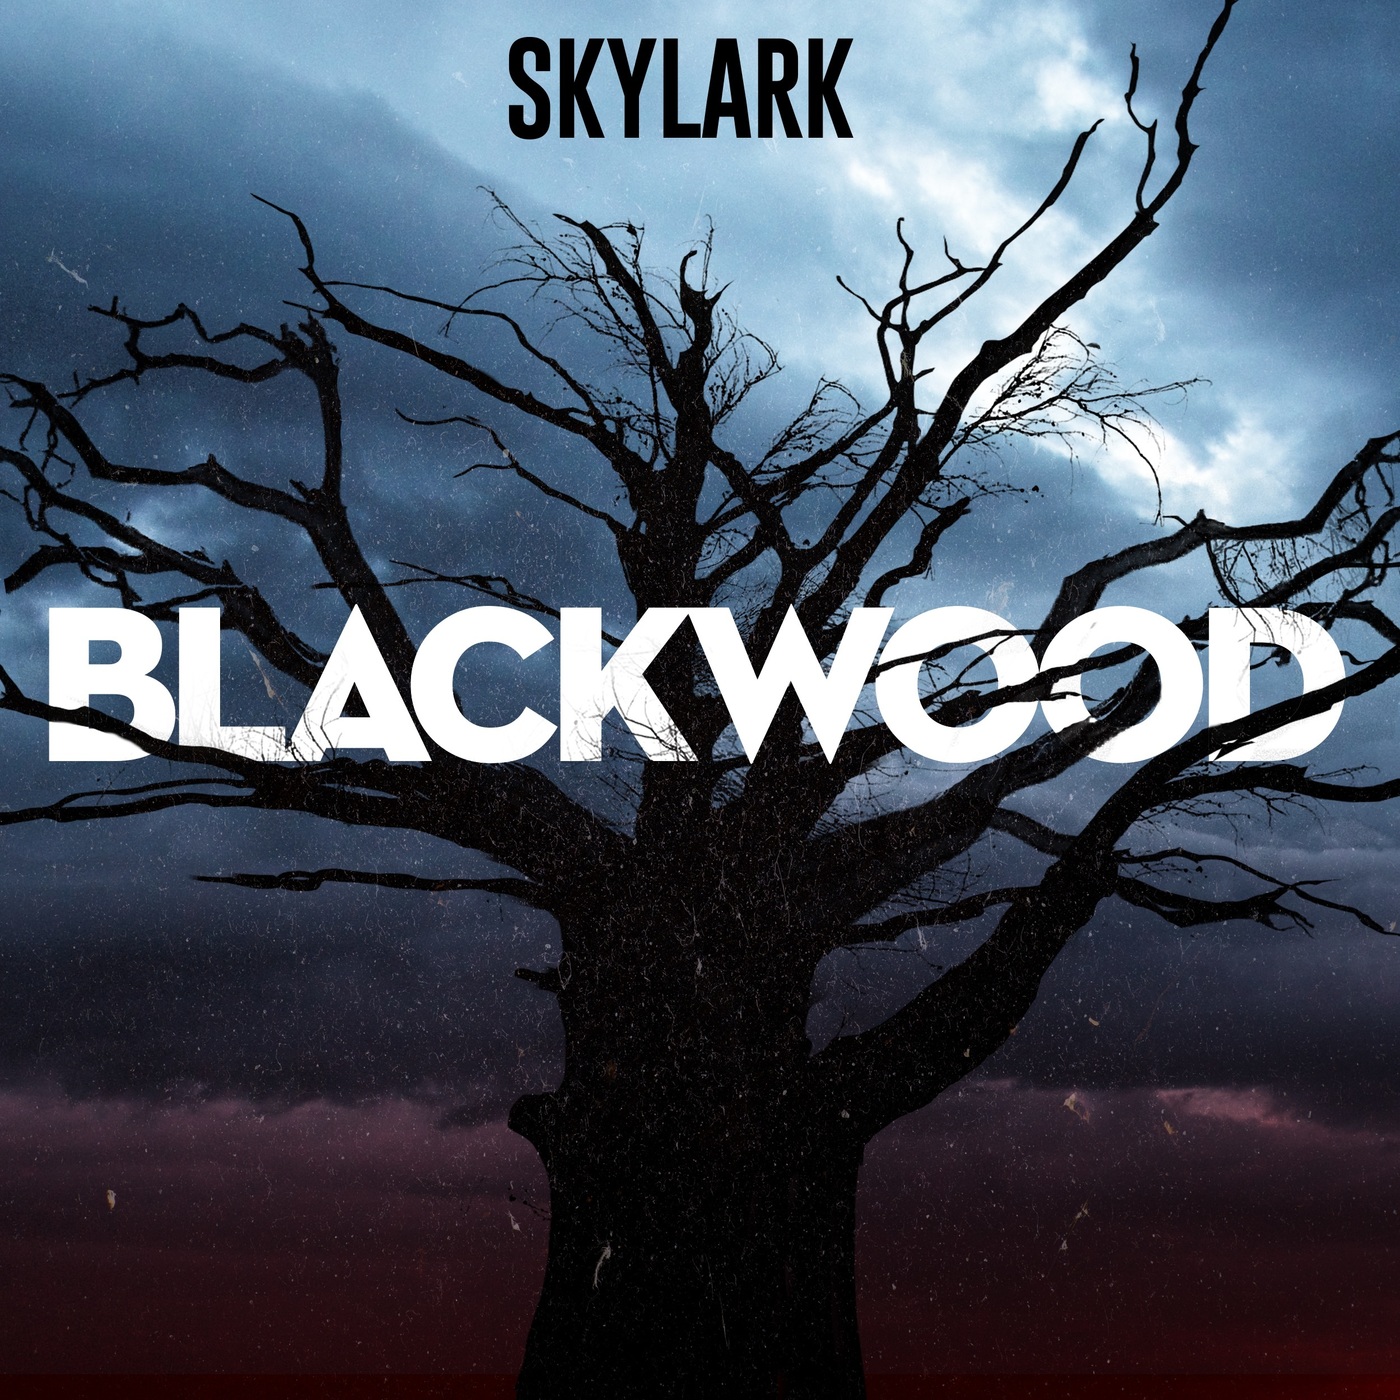 Blackwood podcast